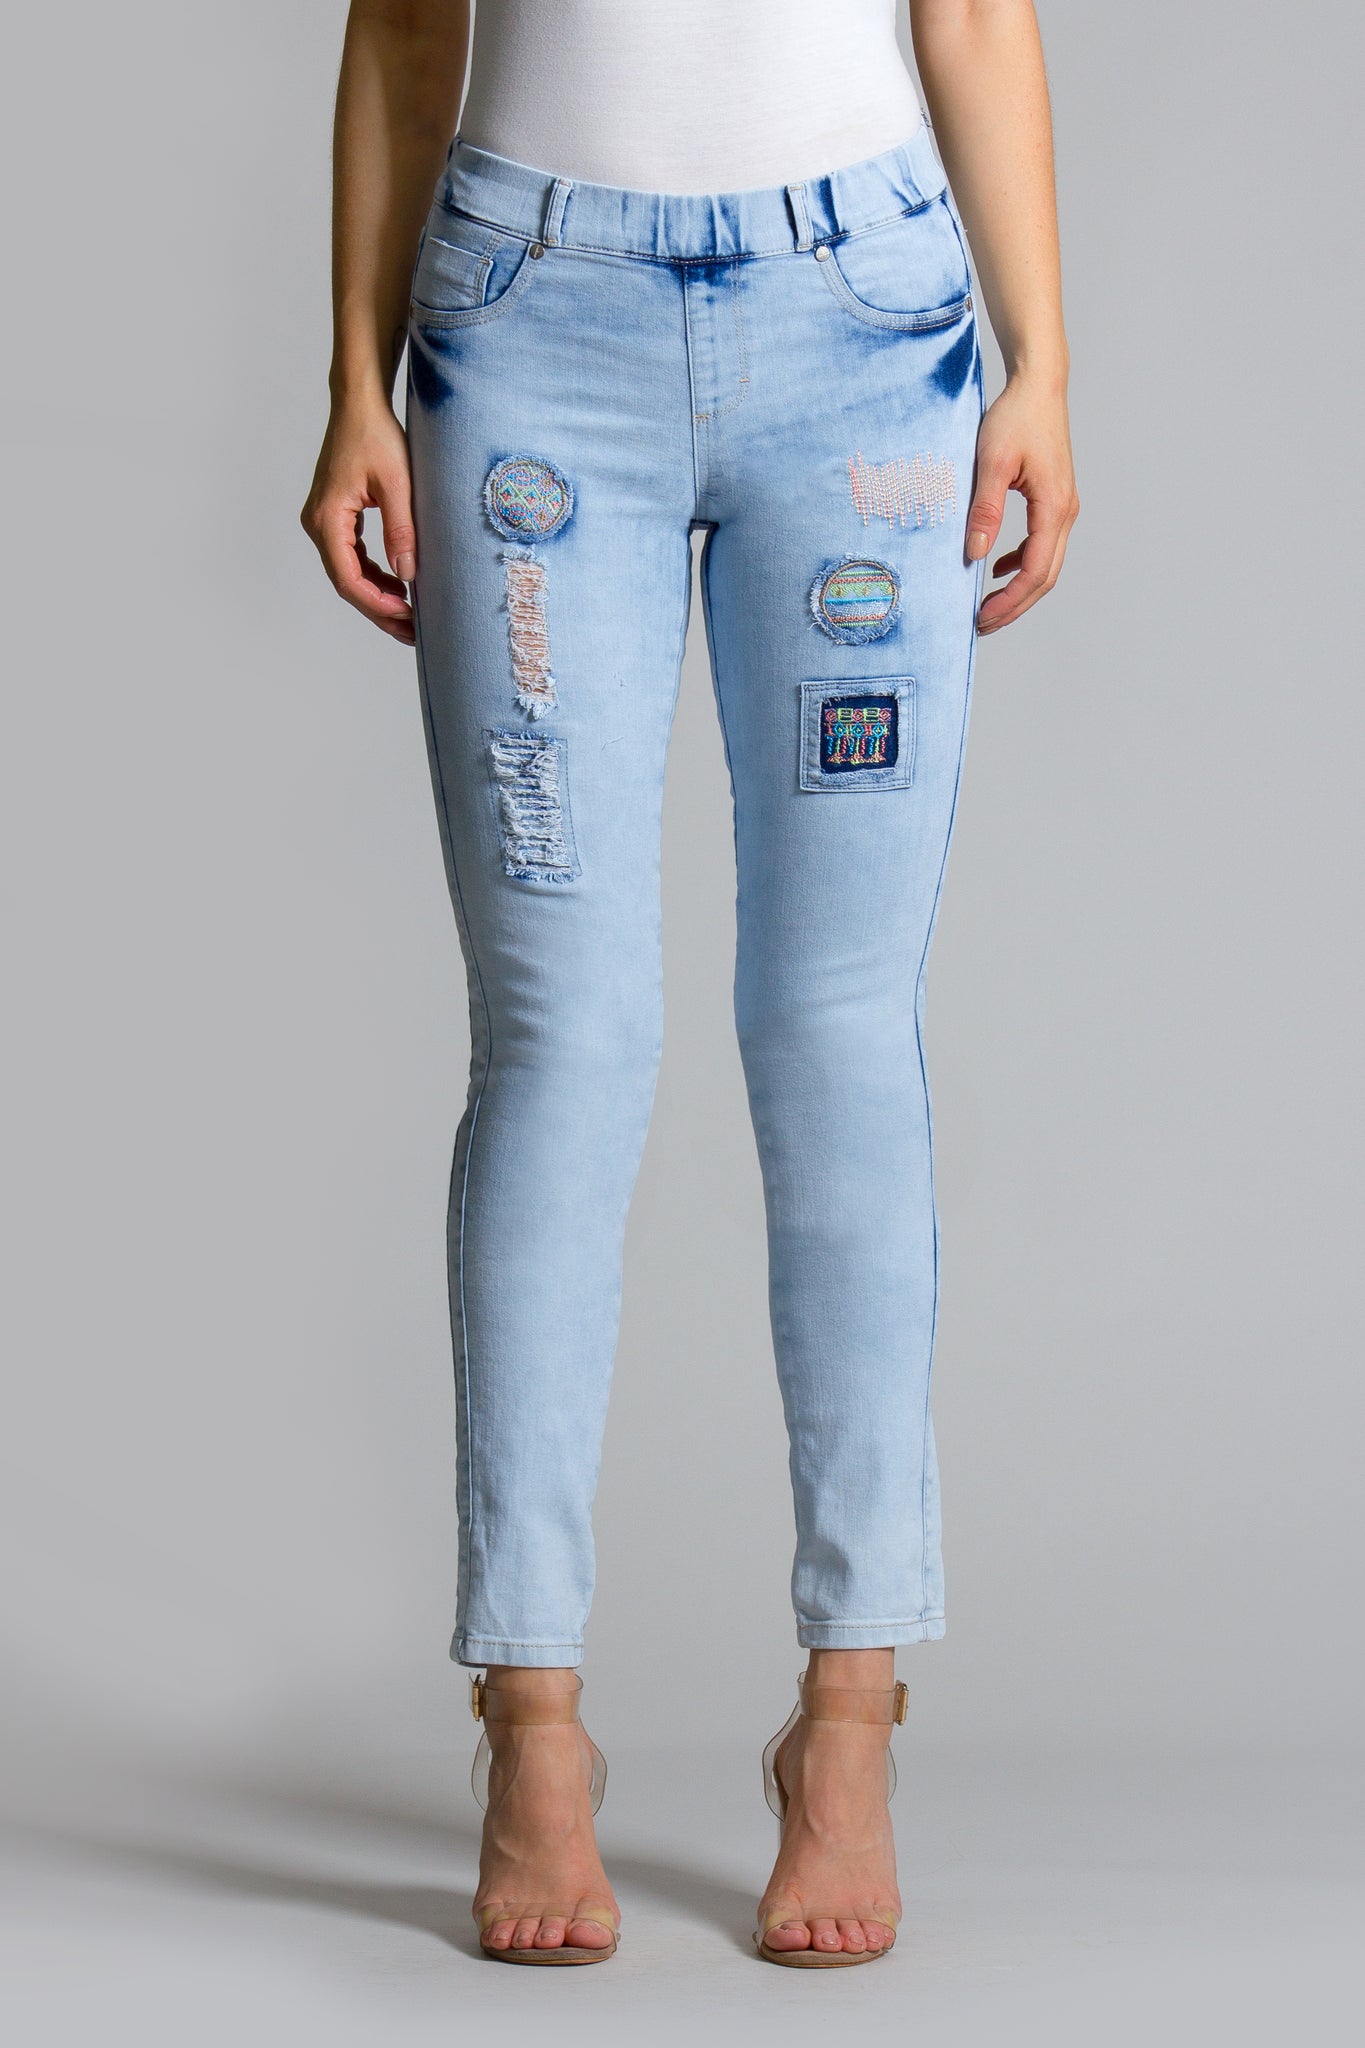 OHPOMP!® Cintura Media Super Skinny Jeans D1115